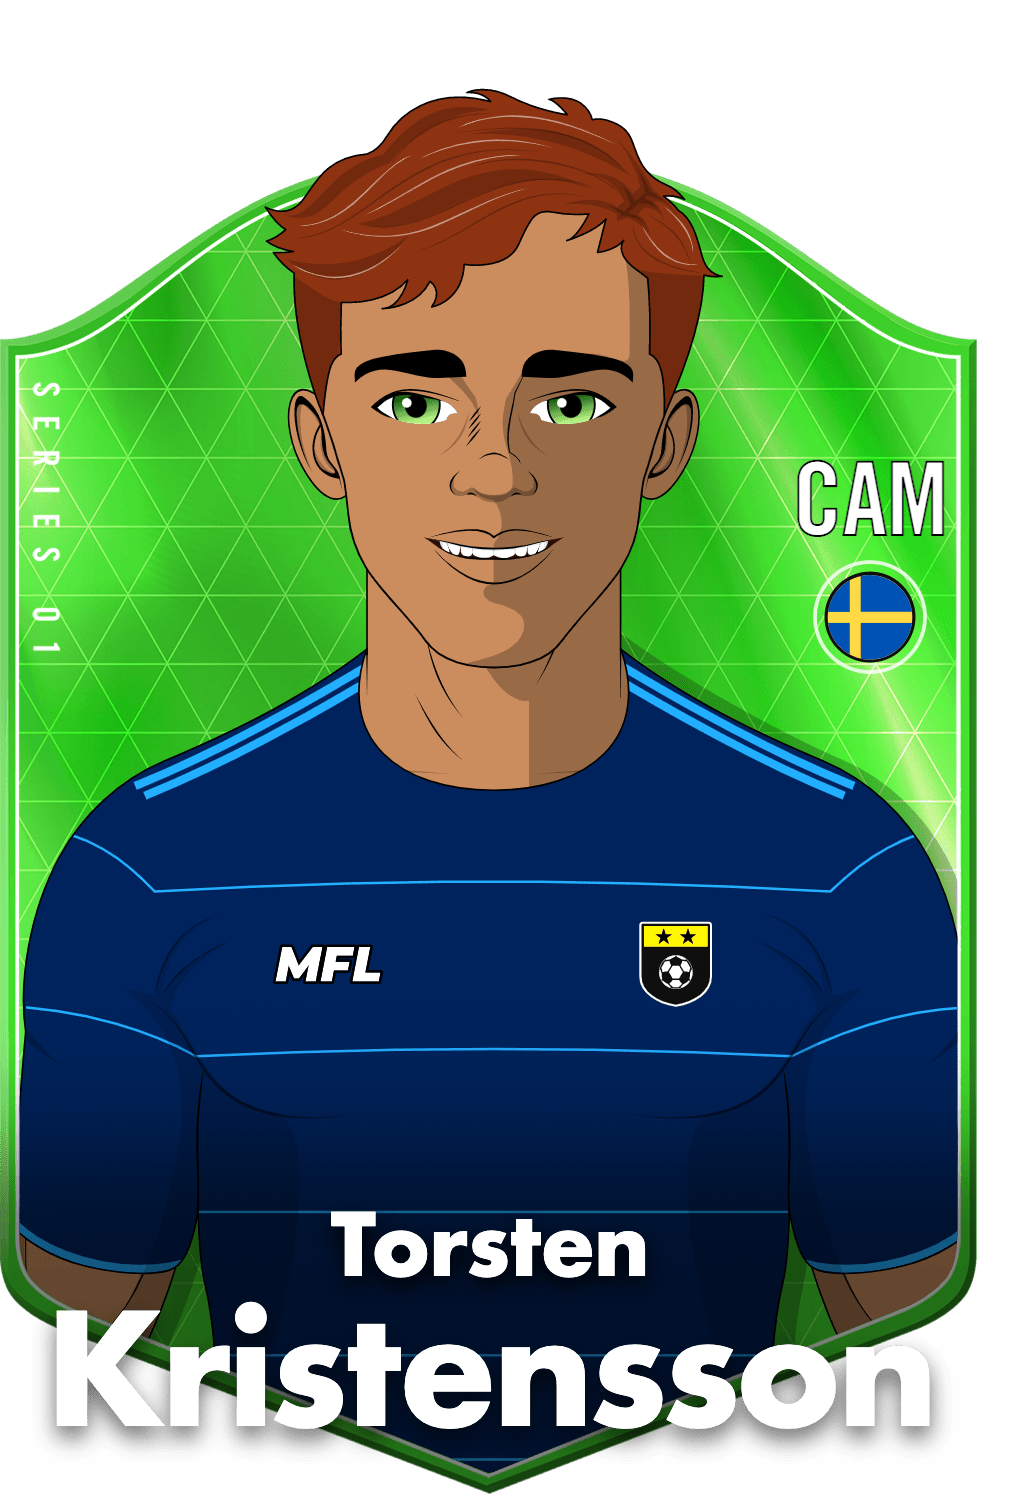 Torsten Kristensson